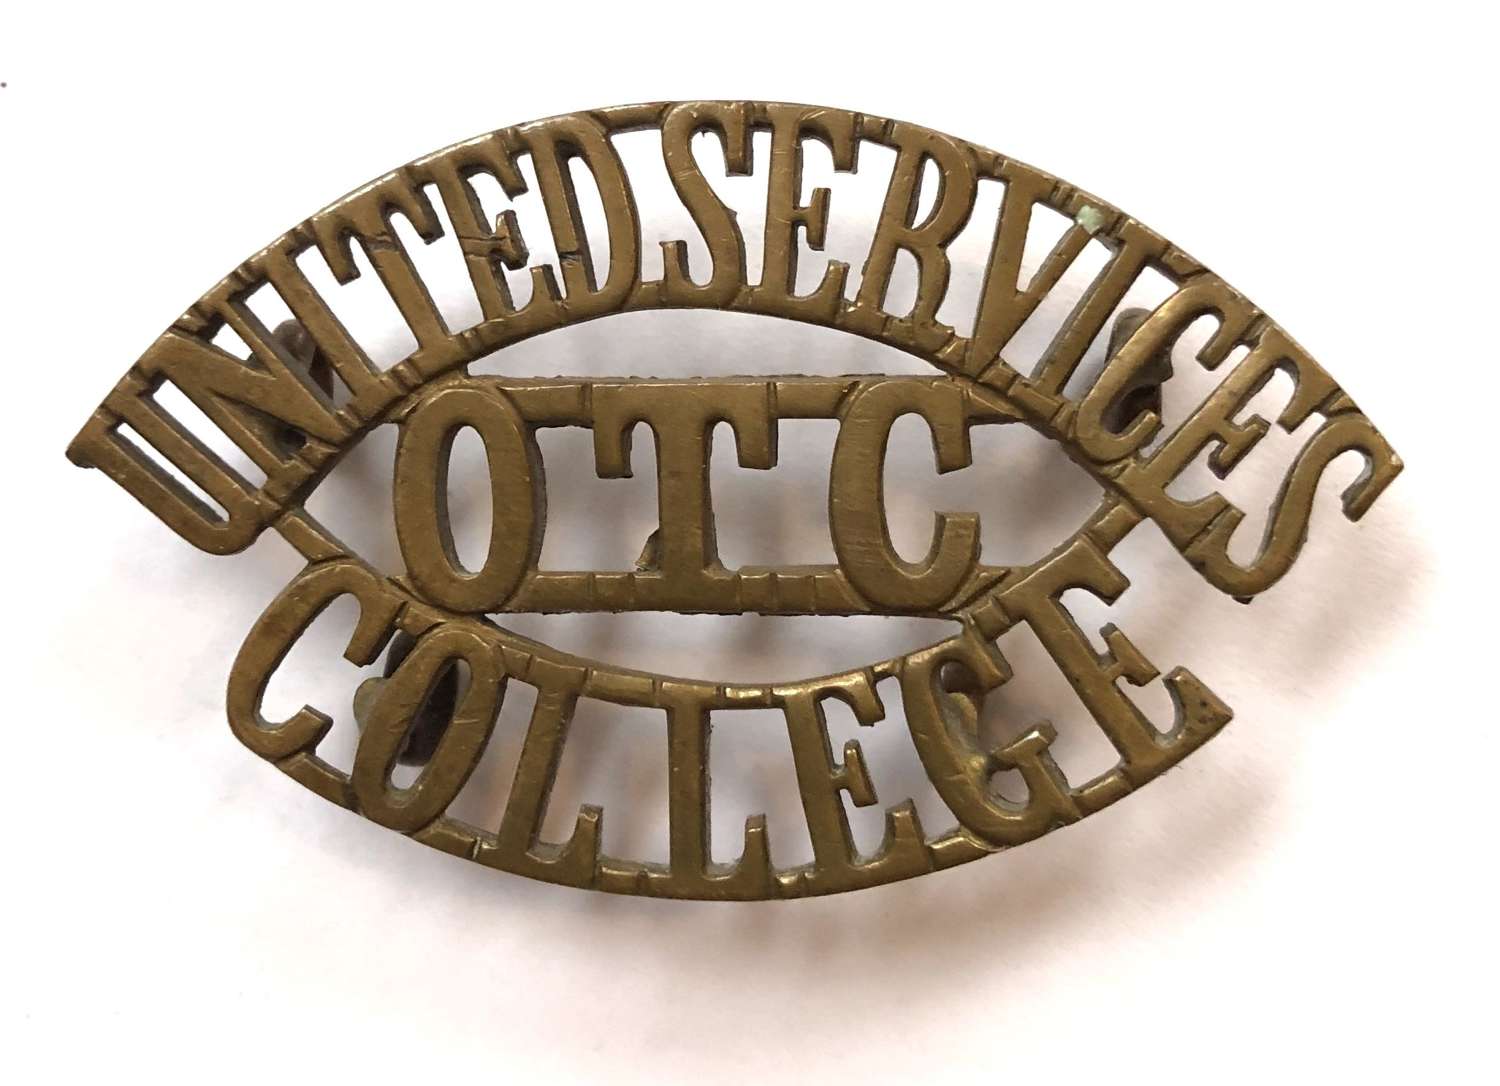 UNITED SERVICES / OTC / COLLEGE shoulder title c1908-40